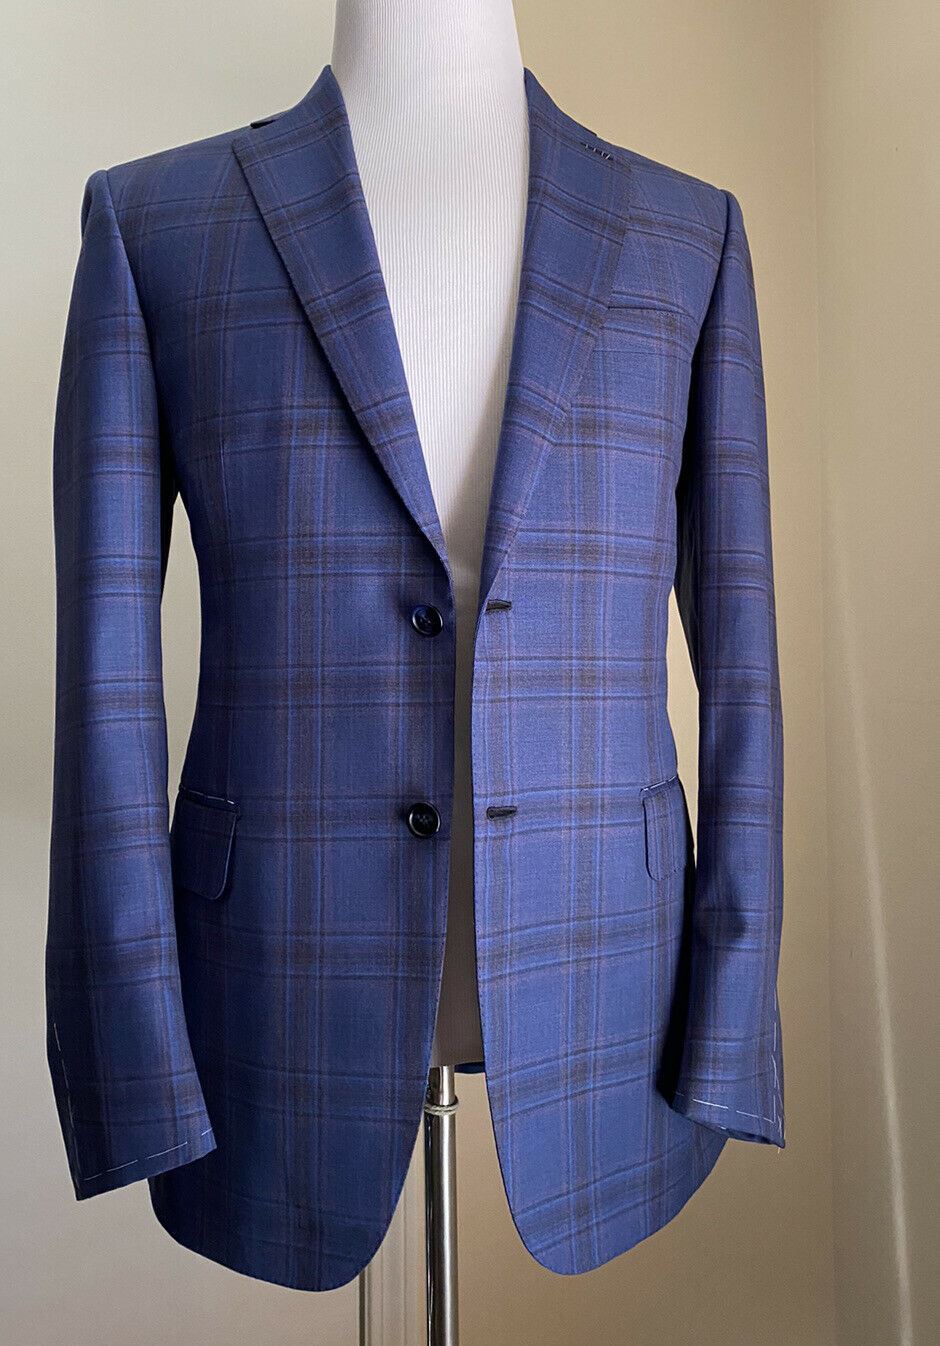 NWT $4900 Brioni Men’s Wool Sport Coat Blazer Jacket Blue 38R US/48R Eu Italy